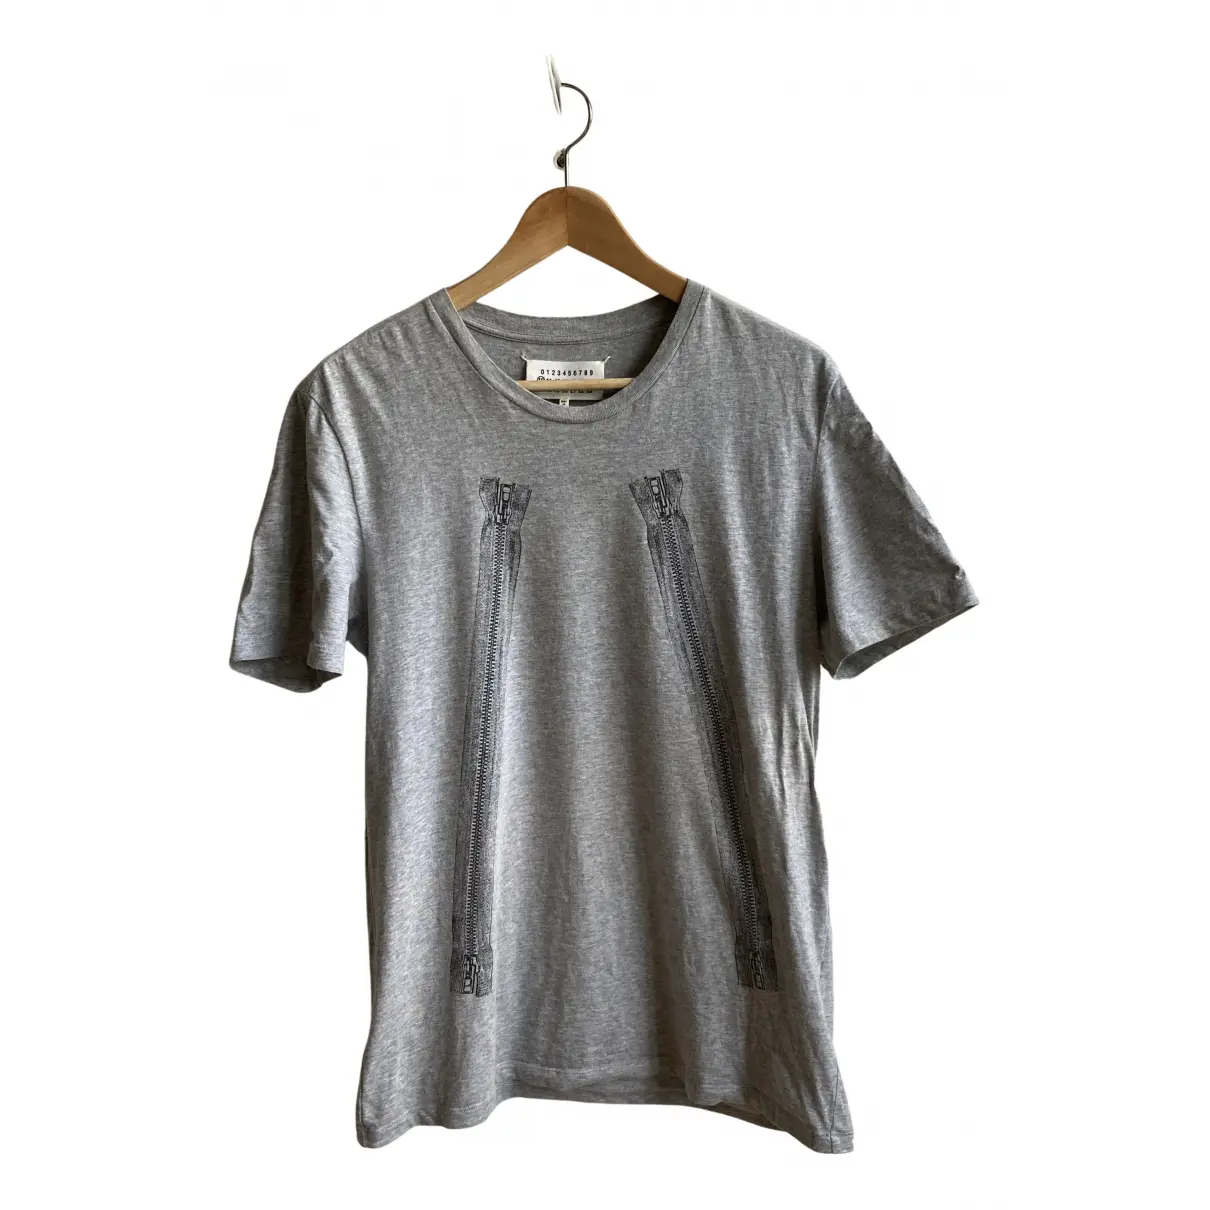 Grey Cotton T-shirt Maison Martin Margiela